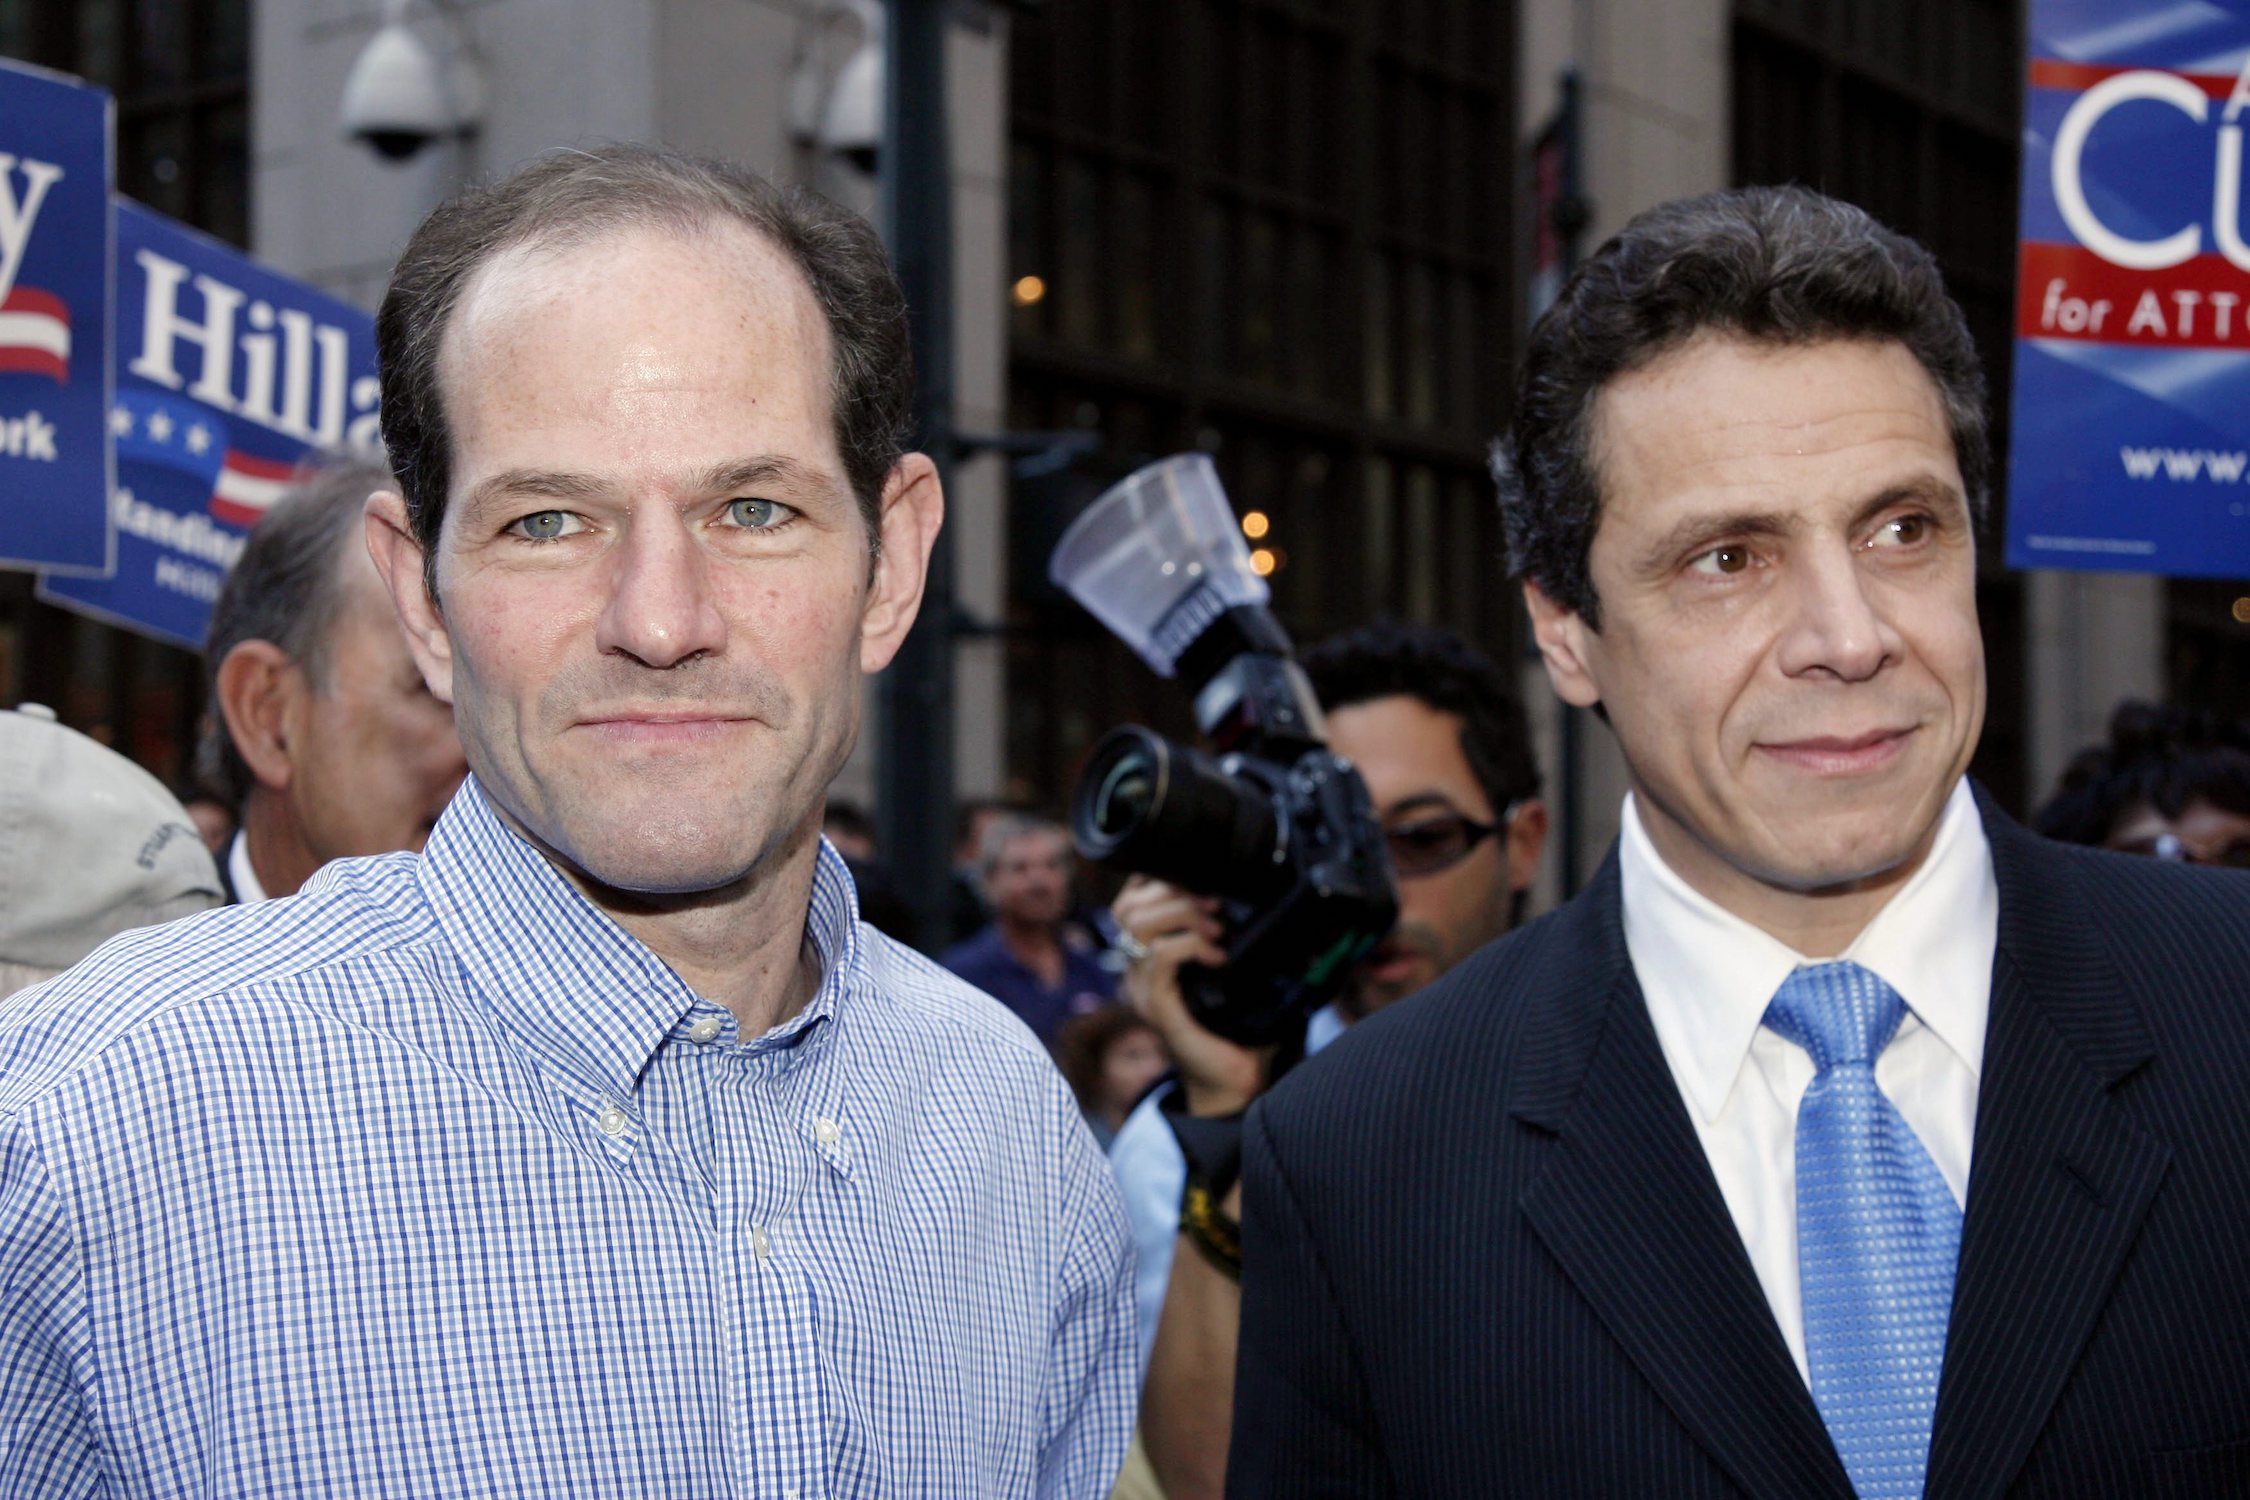 Gov. Andrew Cuomo and Eliot Spitzer